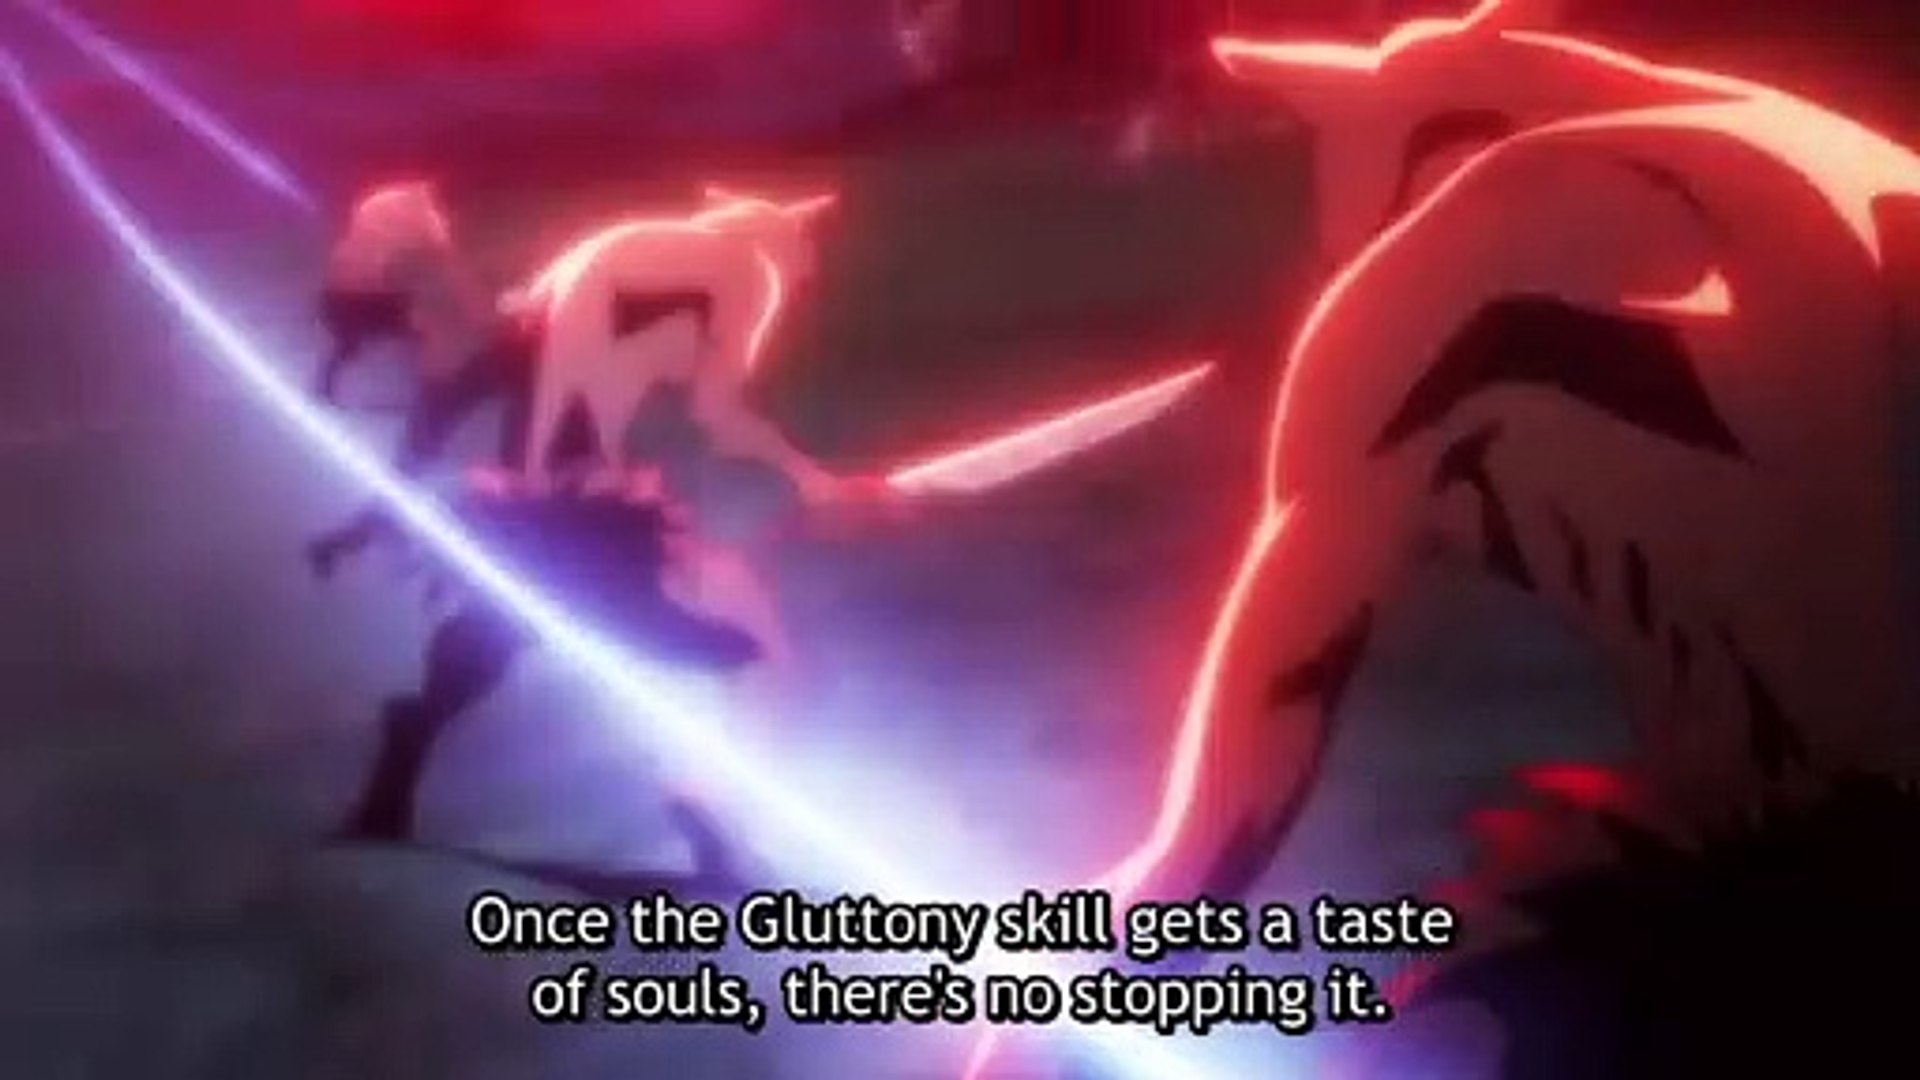 Berserk of Gluttony Ep 2 / BOUSHOKU NO BERSERK Ep 2 / Anime Lord